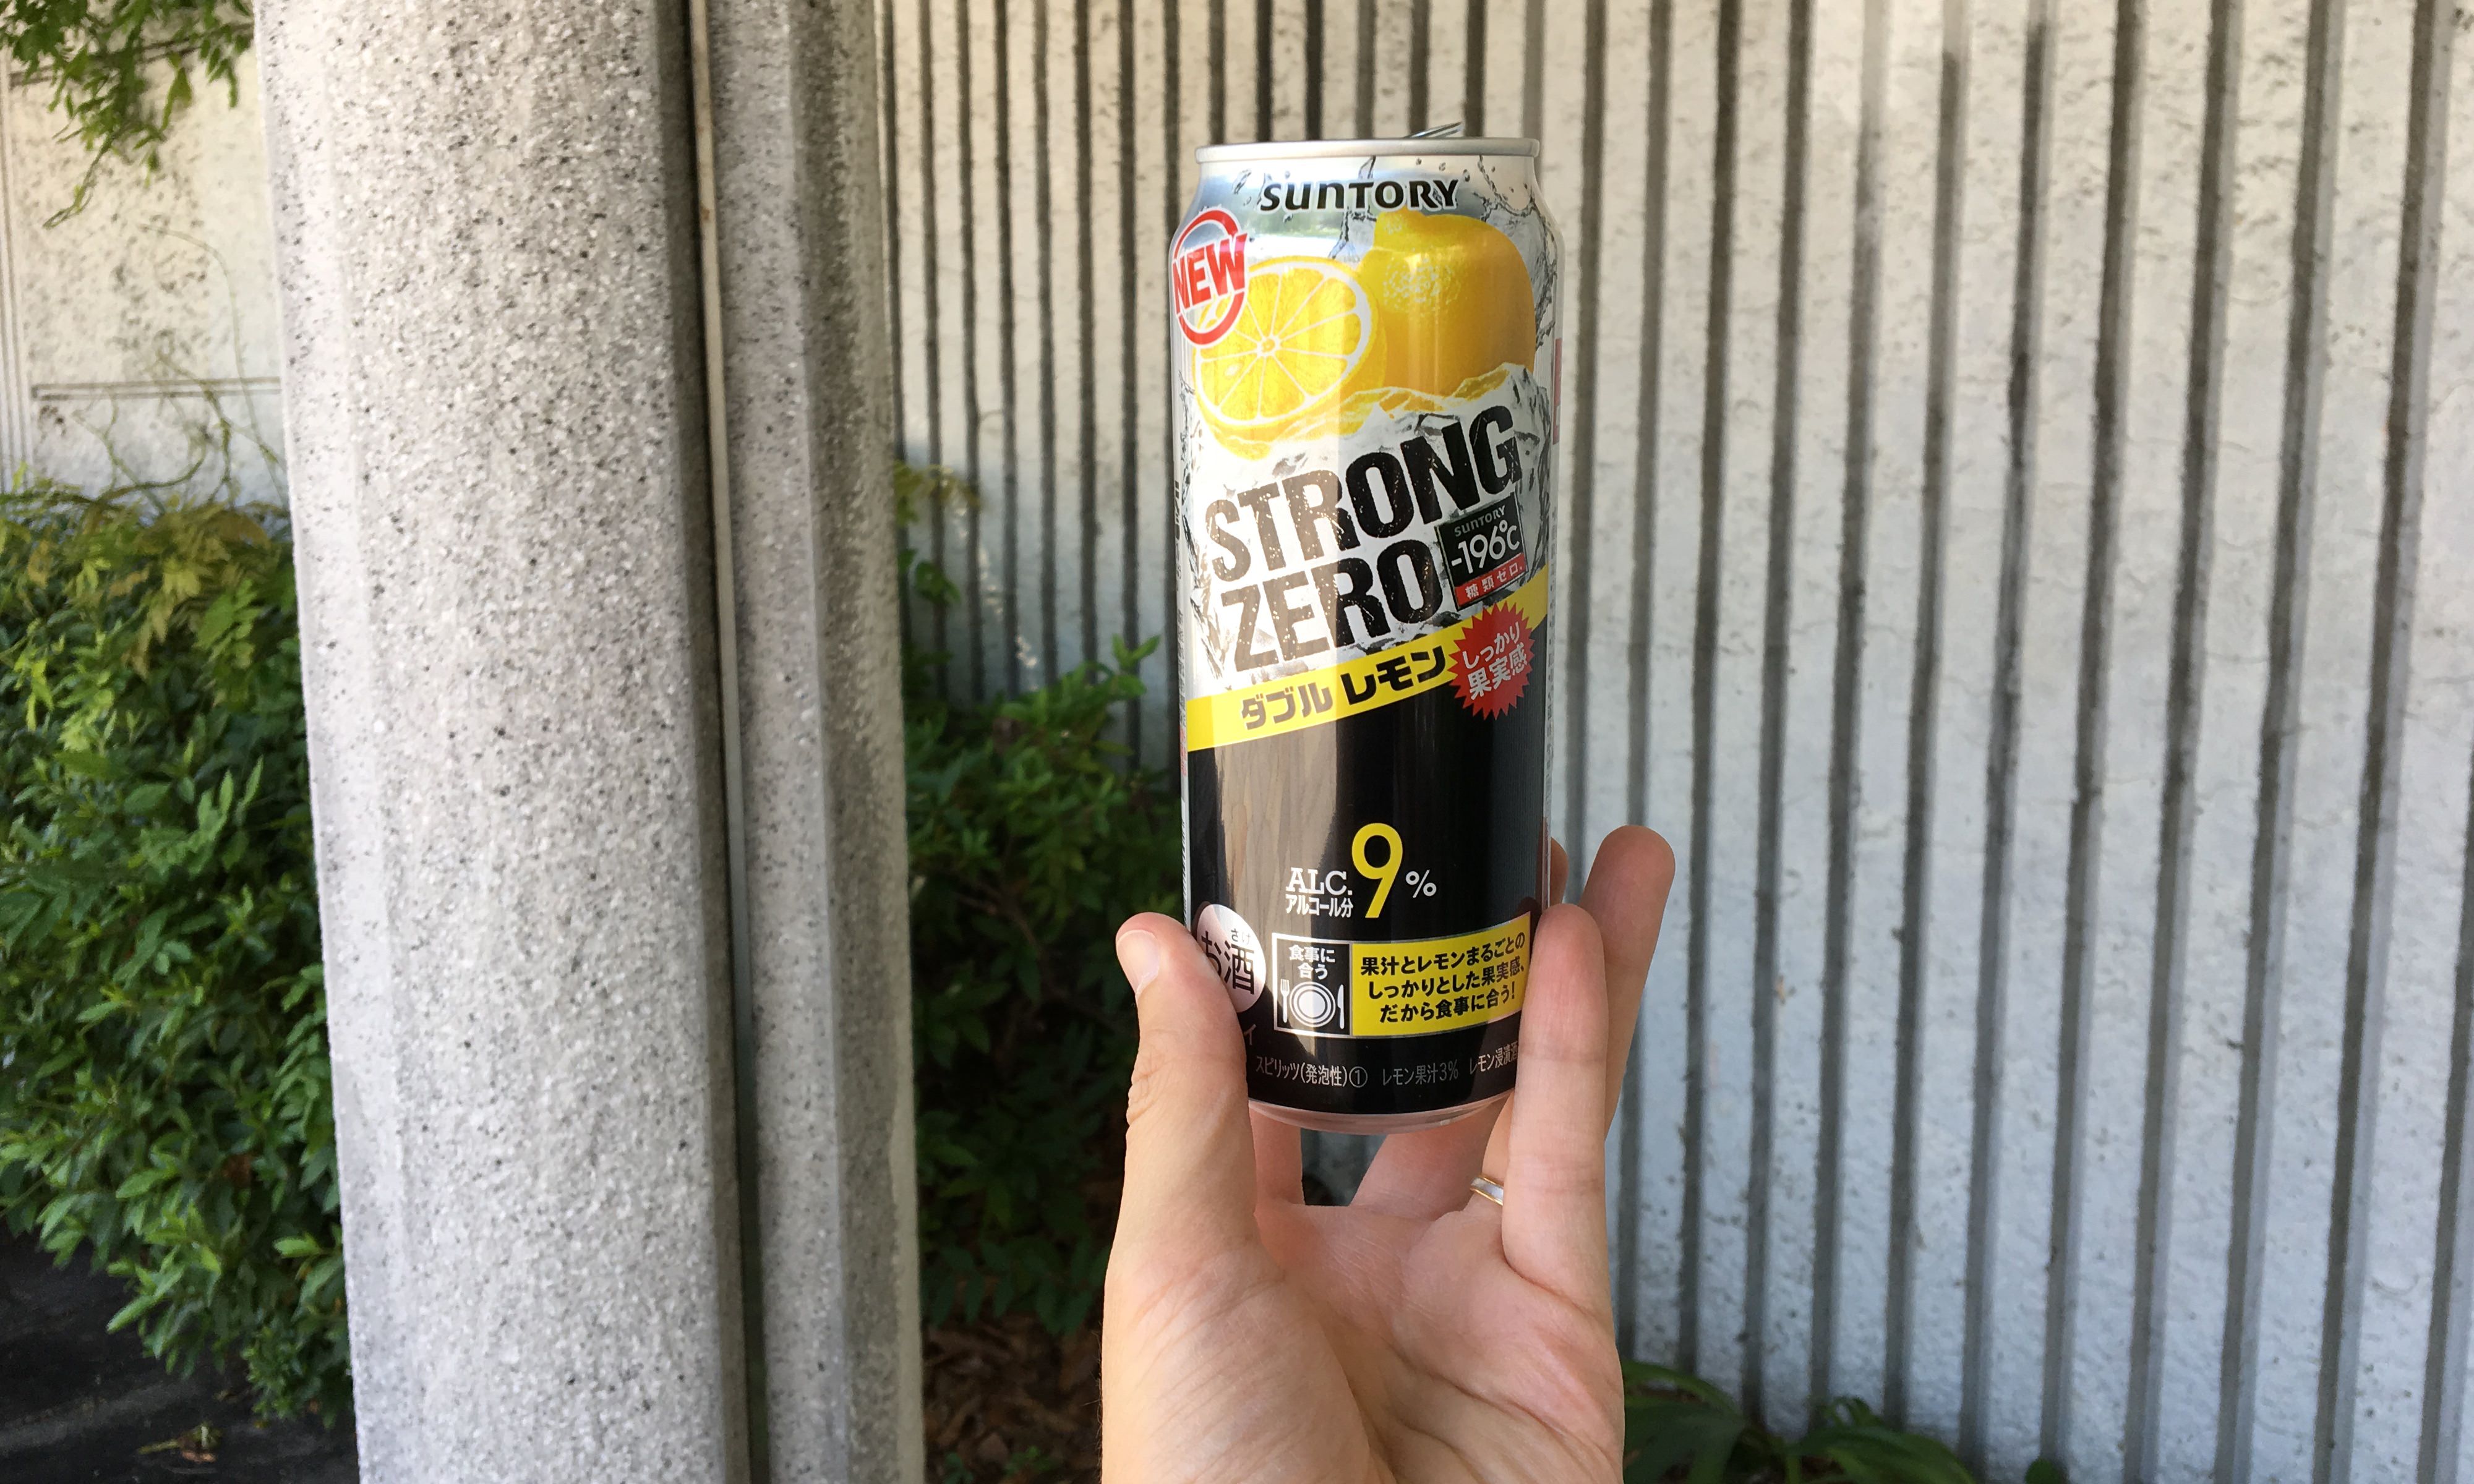 Suntory Strong Zero - Double Lemon